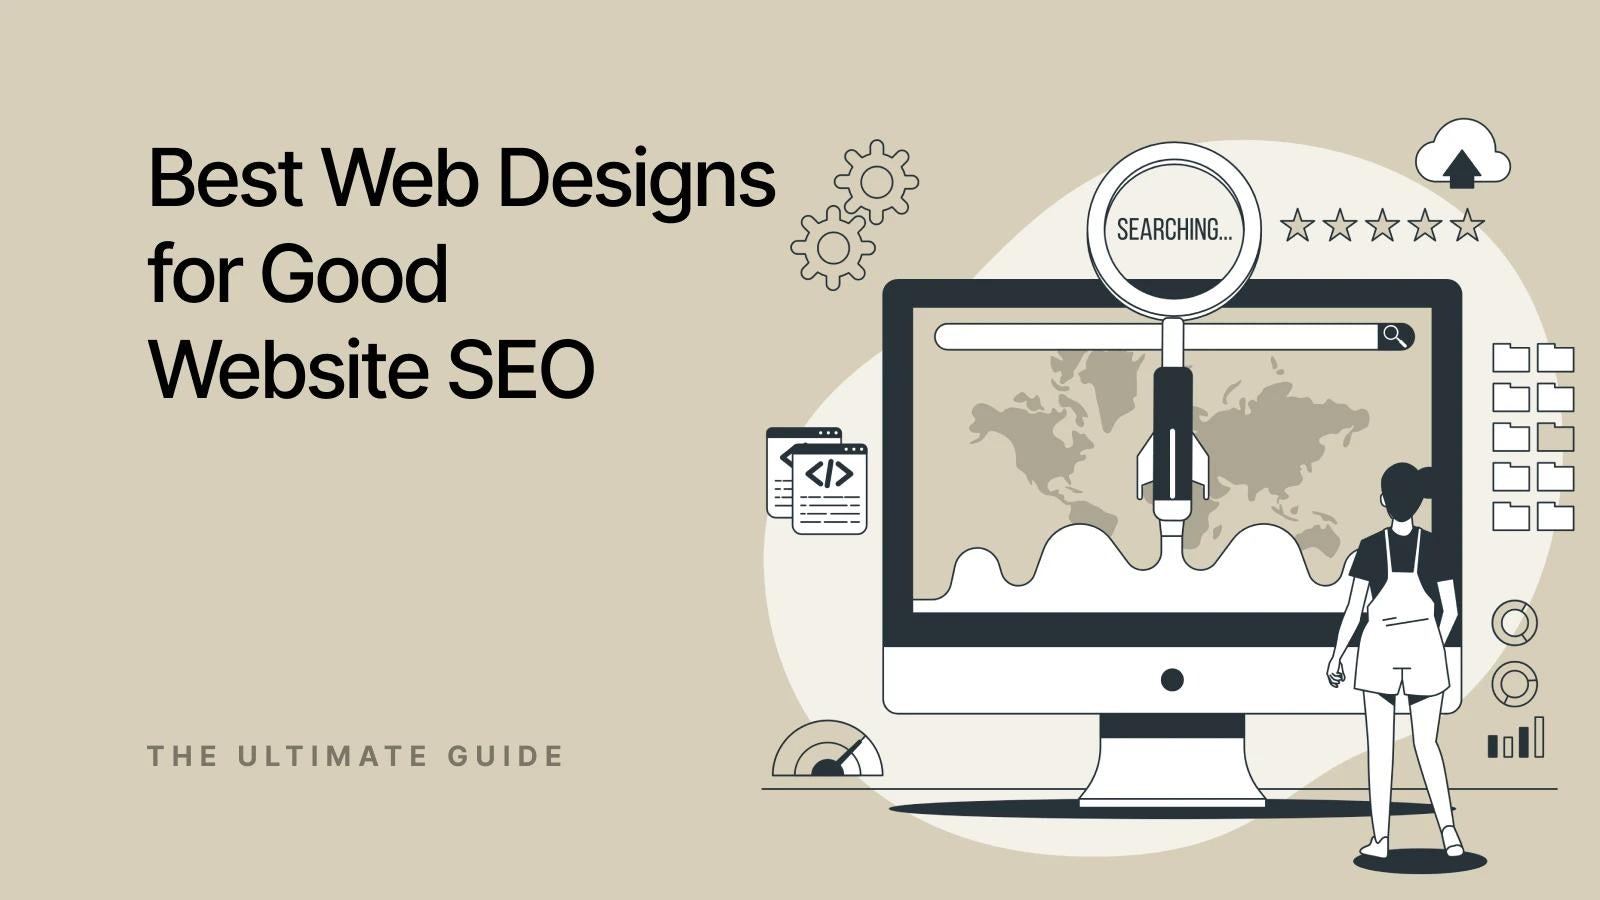 Best Web Designs for Good Website SEO"